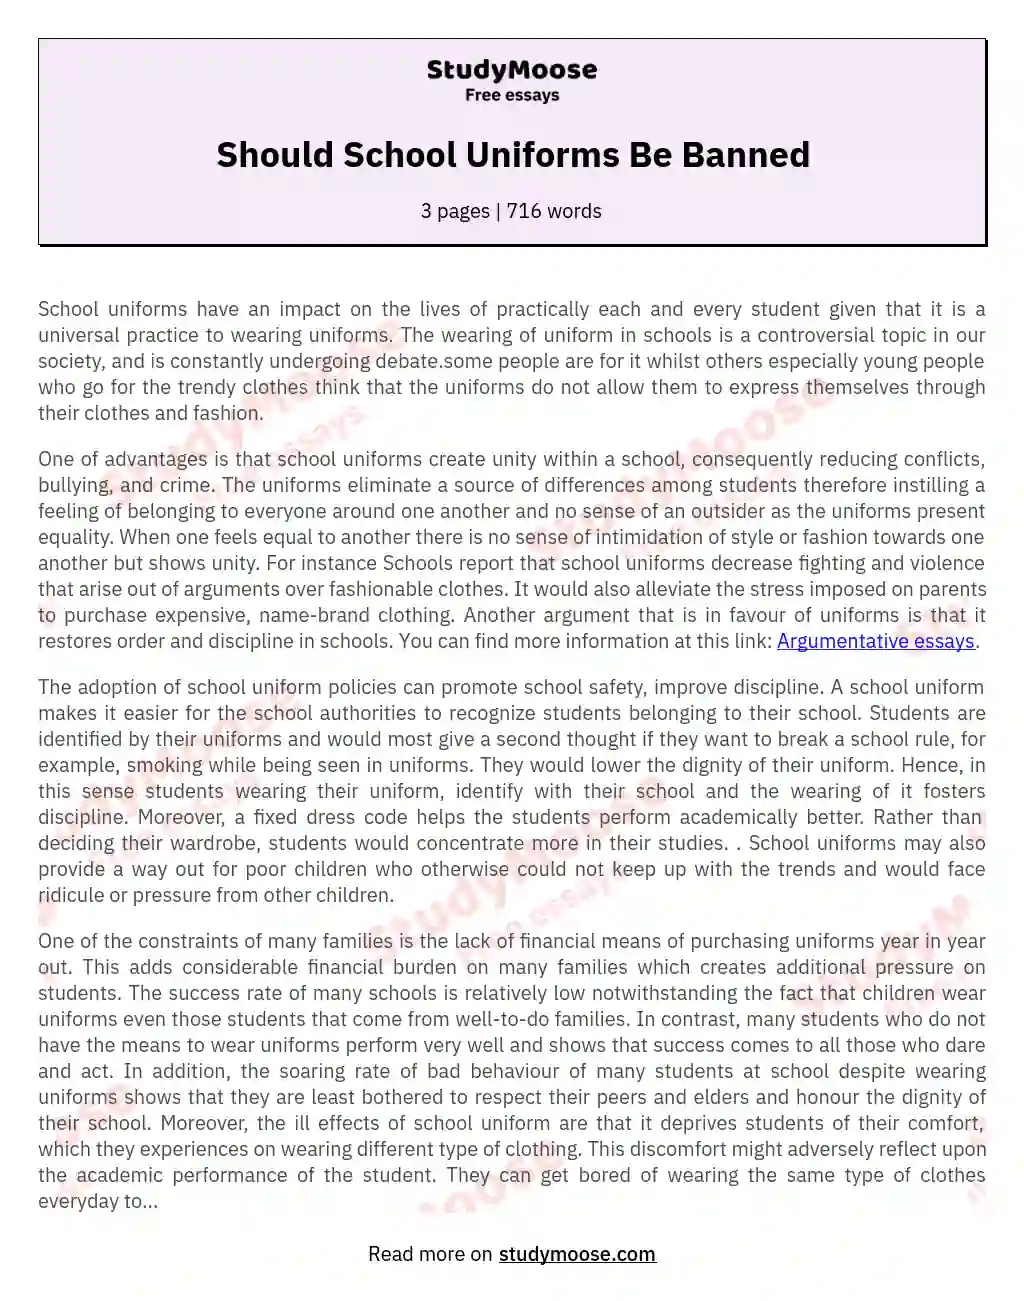 Should School Uniforms Be Banned essay